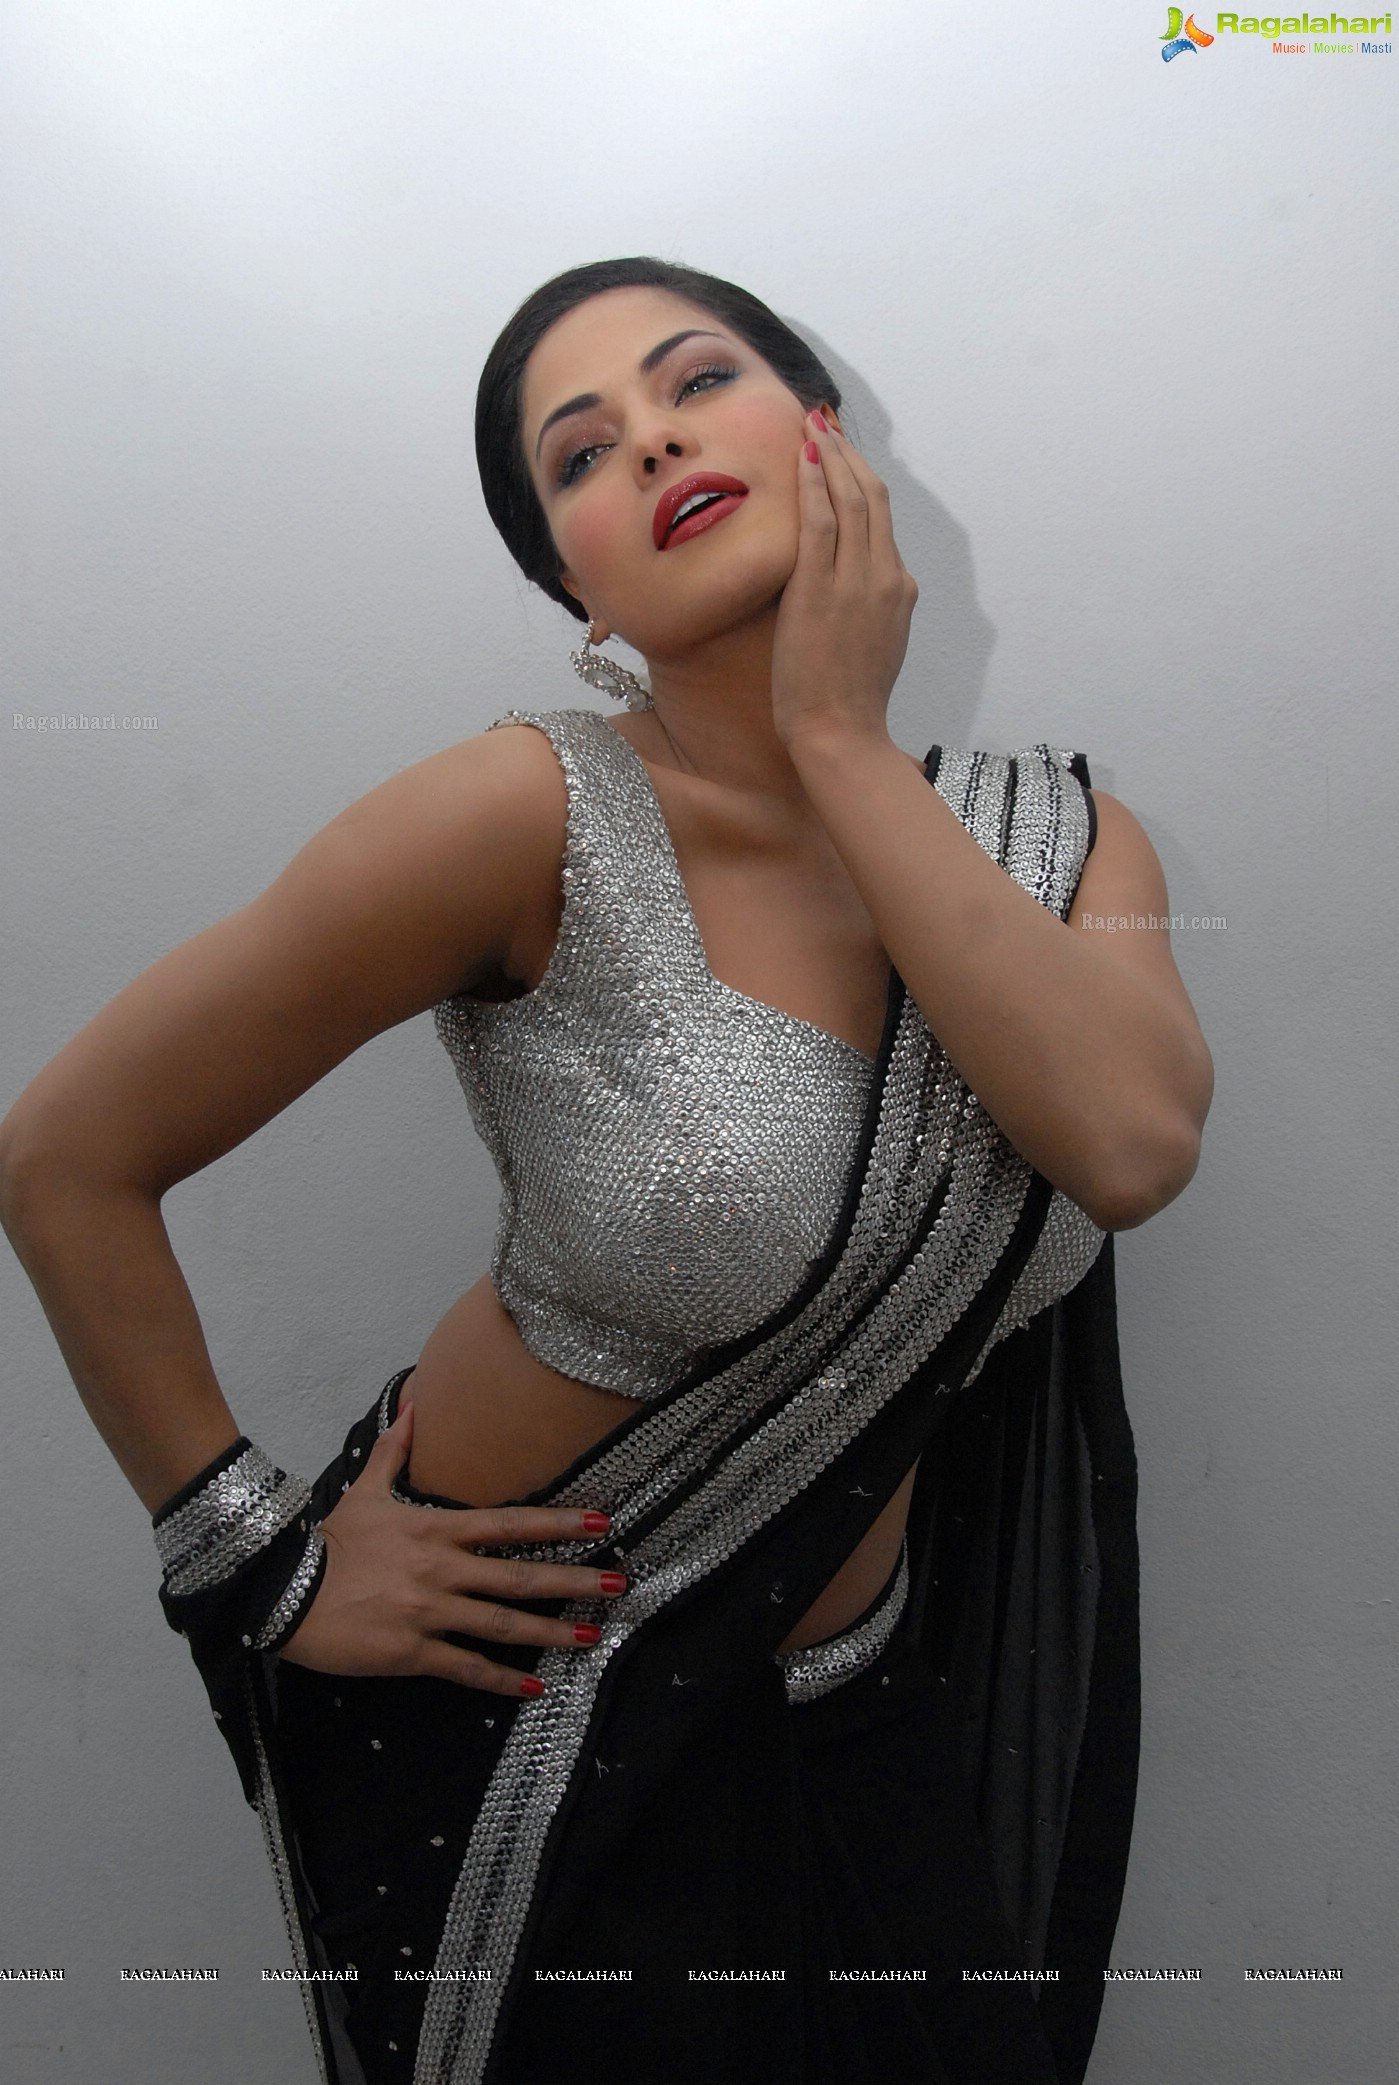 Veena Malik (Posters)